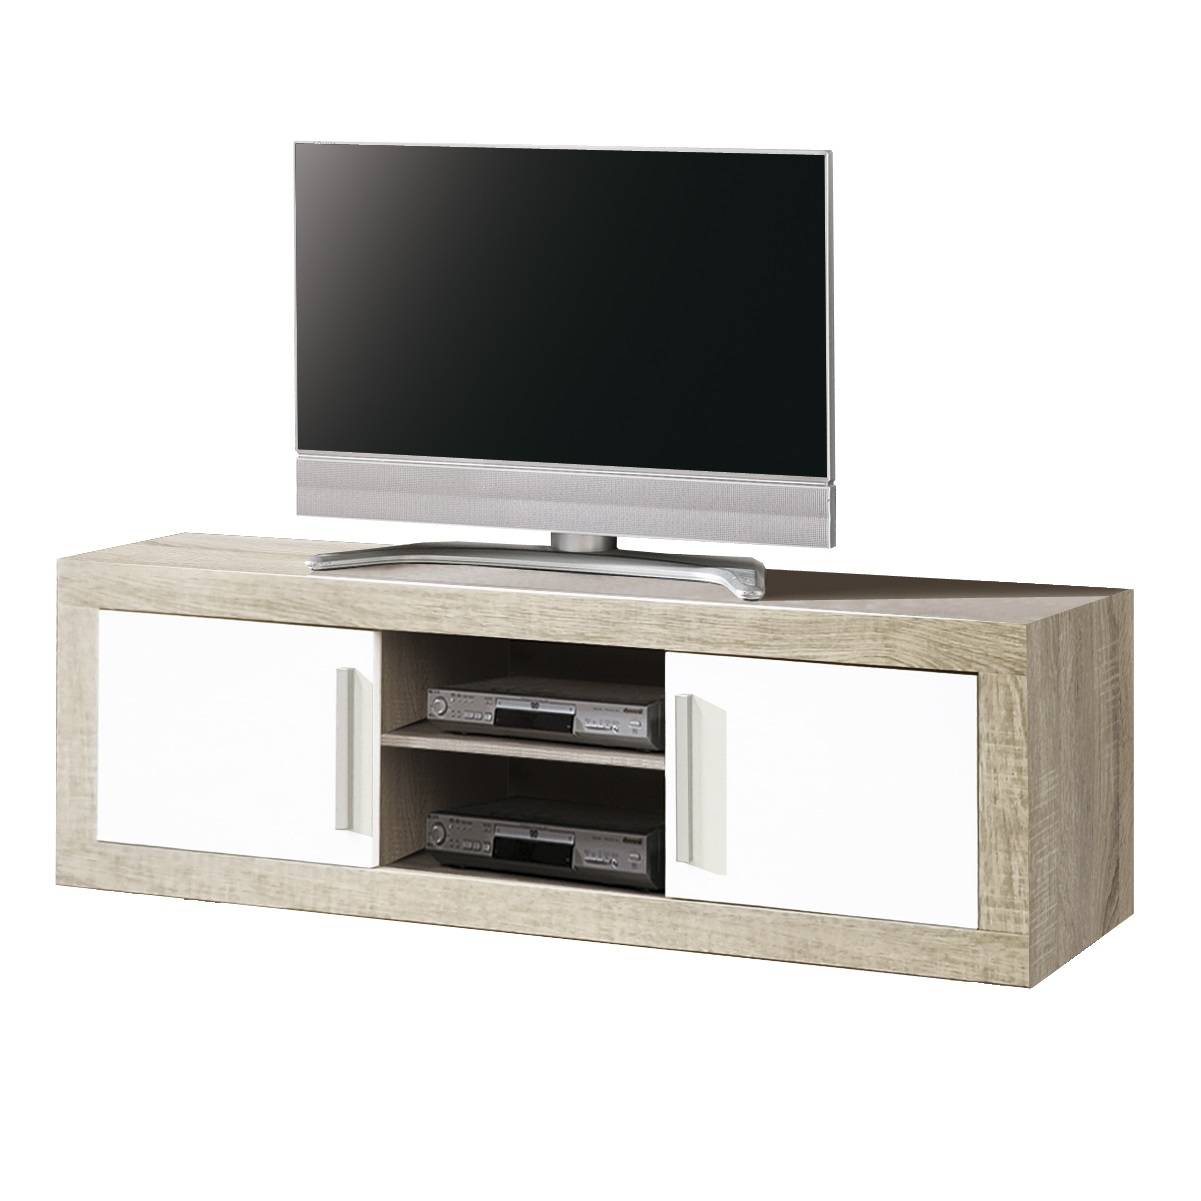 Mesa TV para salón/comedor, color roble claro combinado con blanco